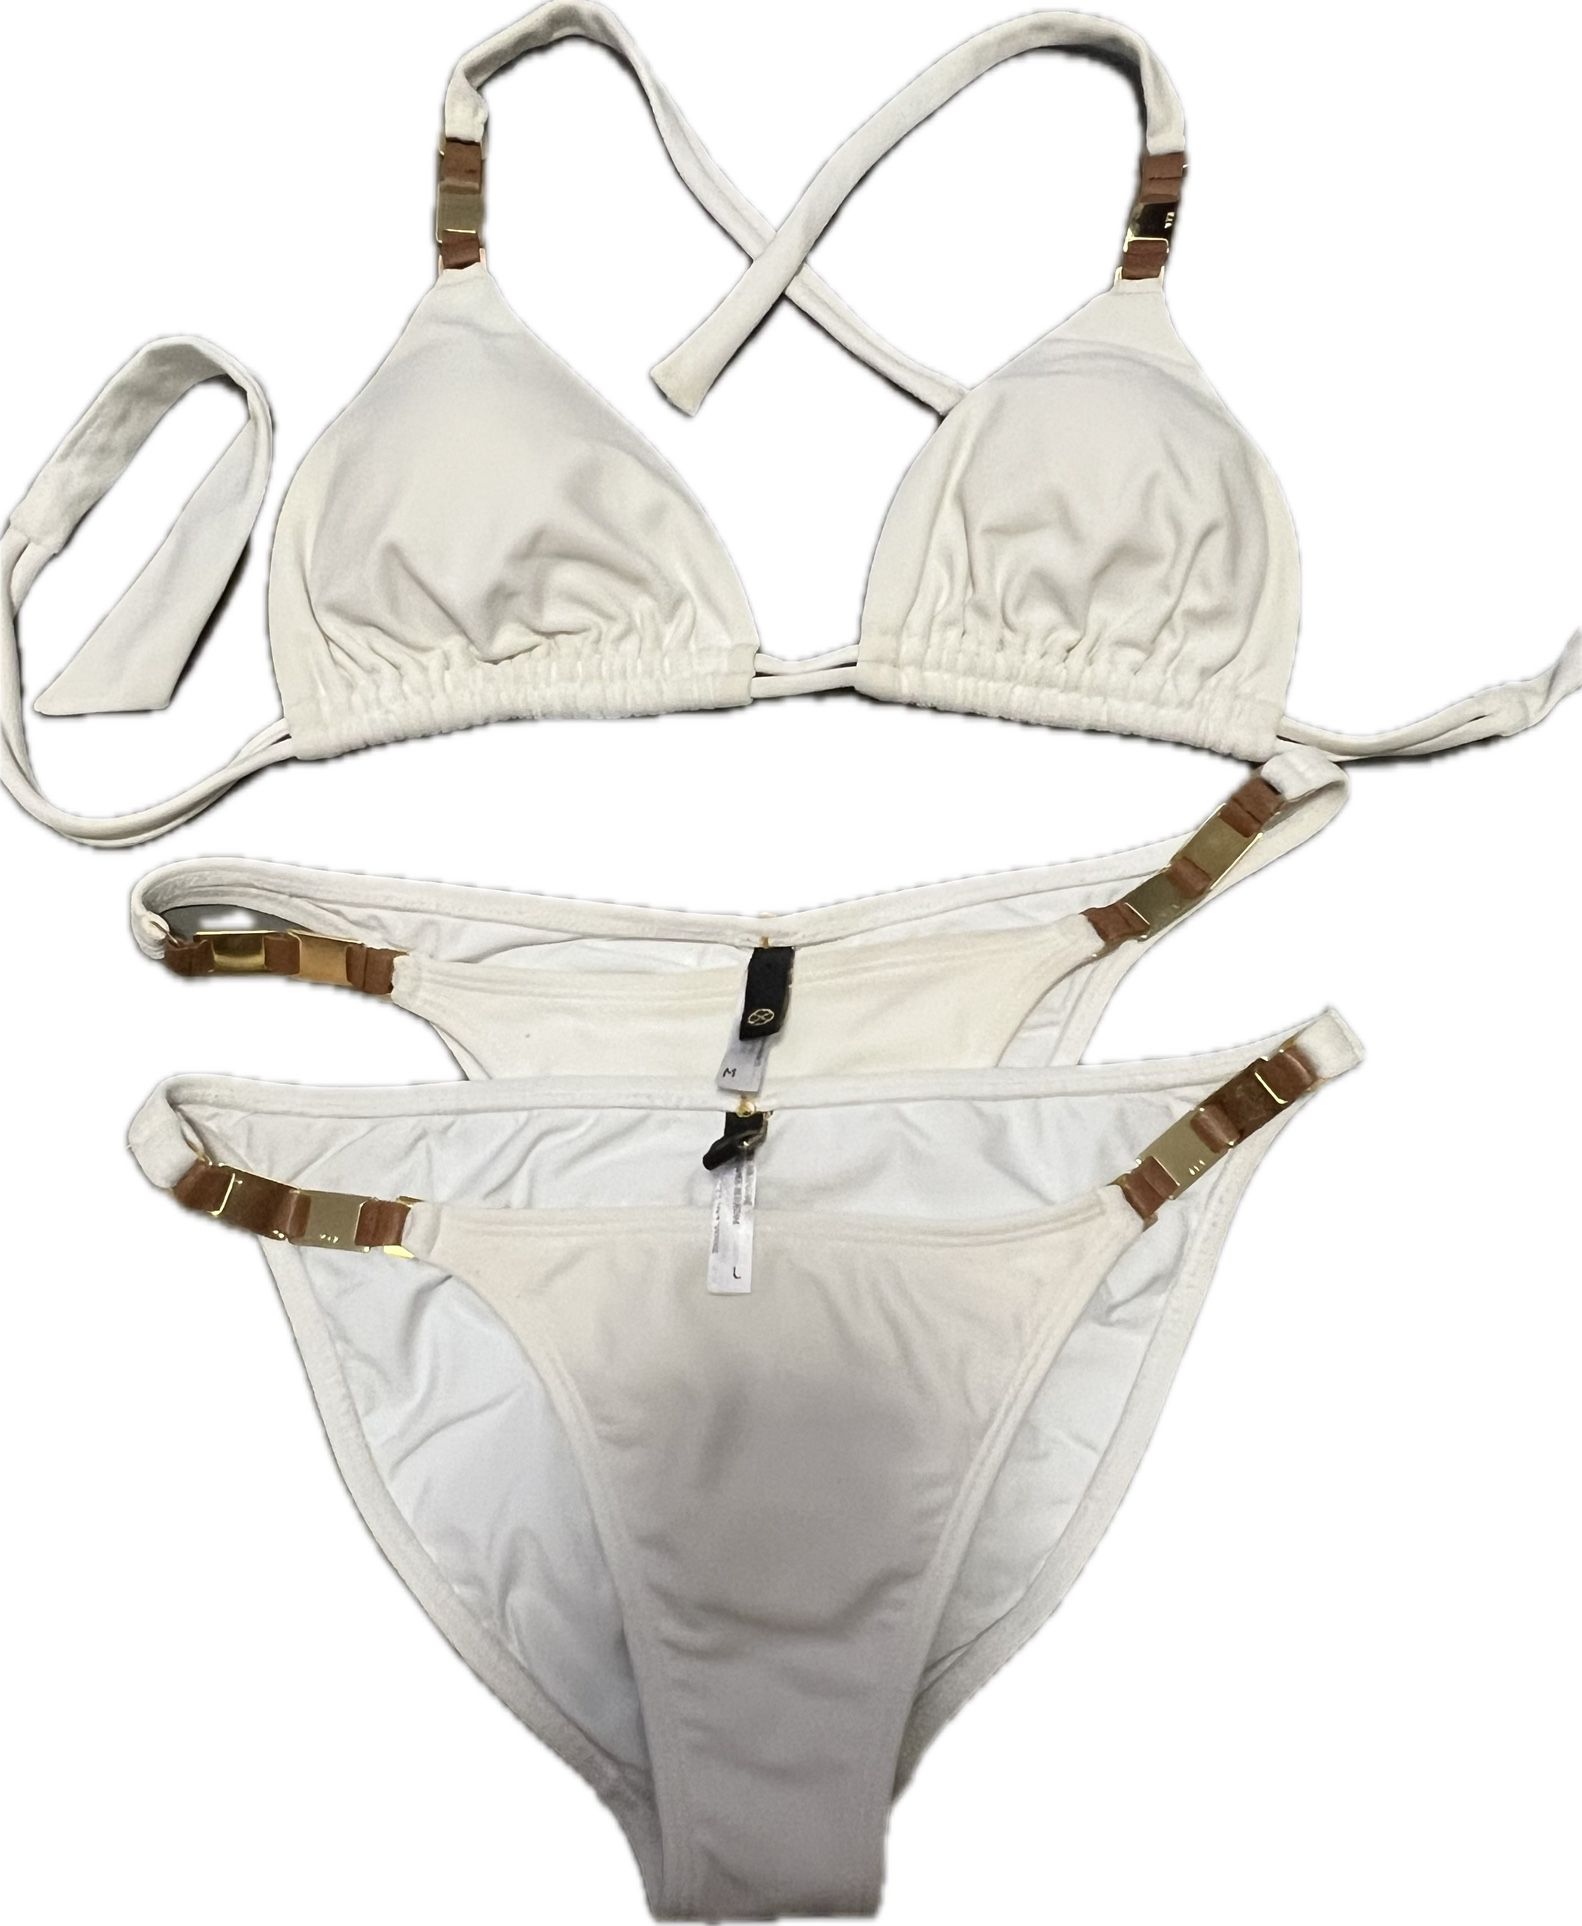 Rare ViX Paula Hermanny White Bikini with Leather and Gold Hardware